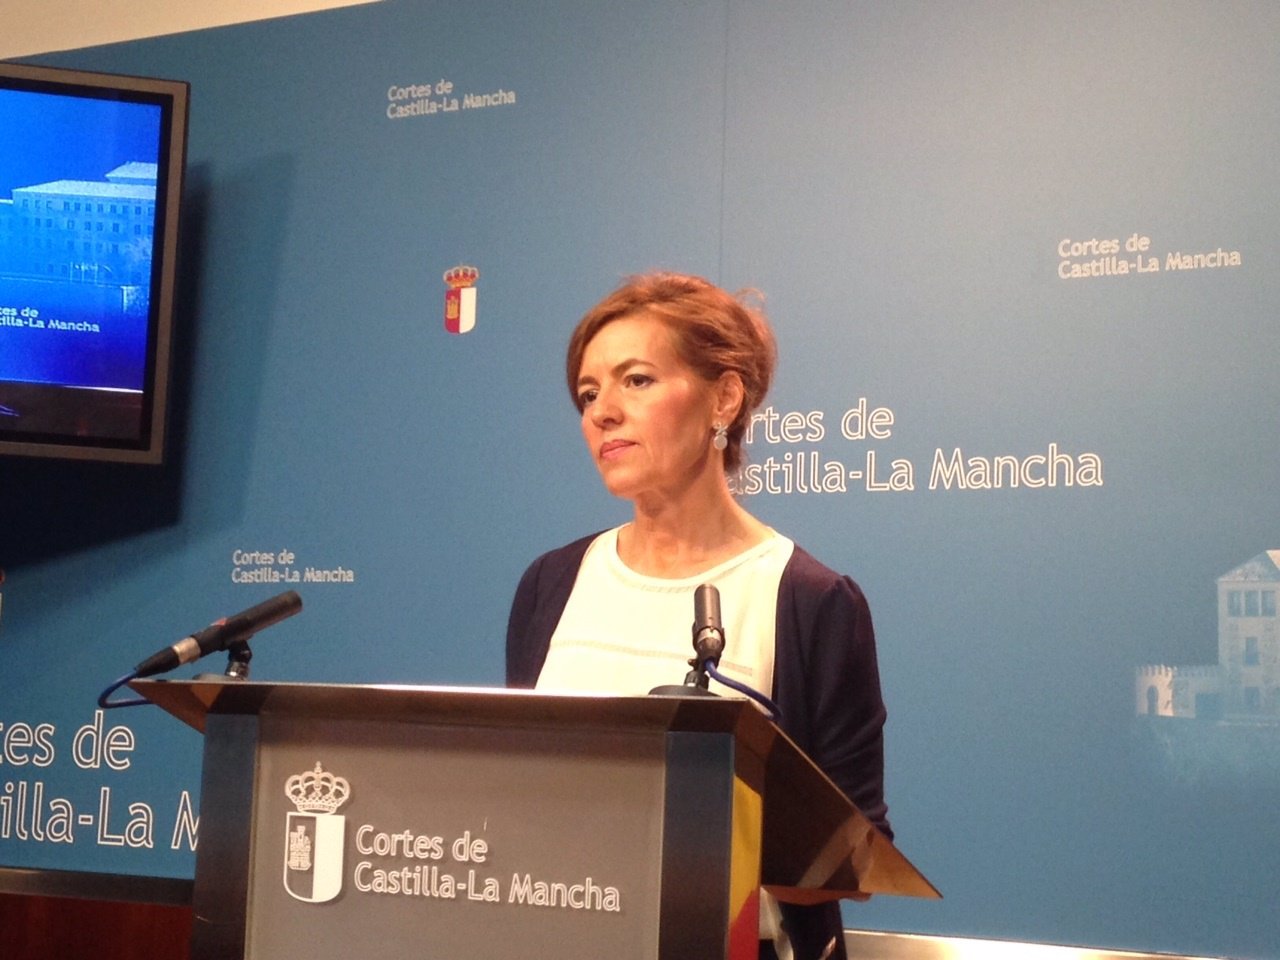 Aurelia Sánchez